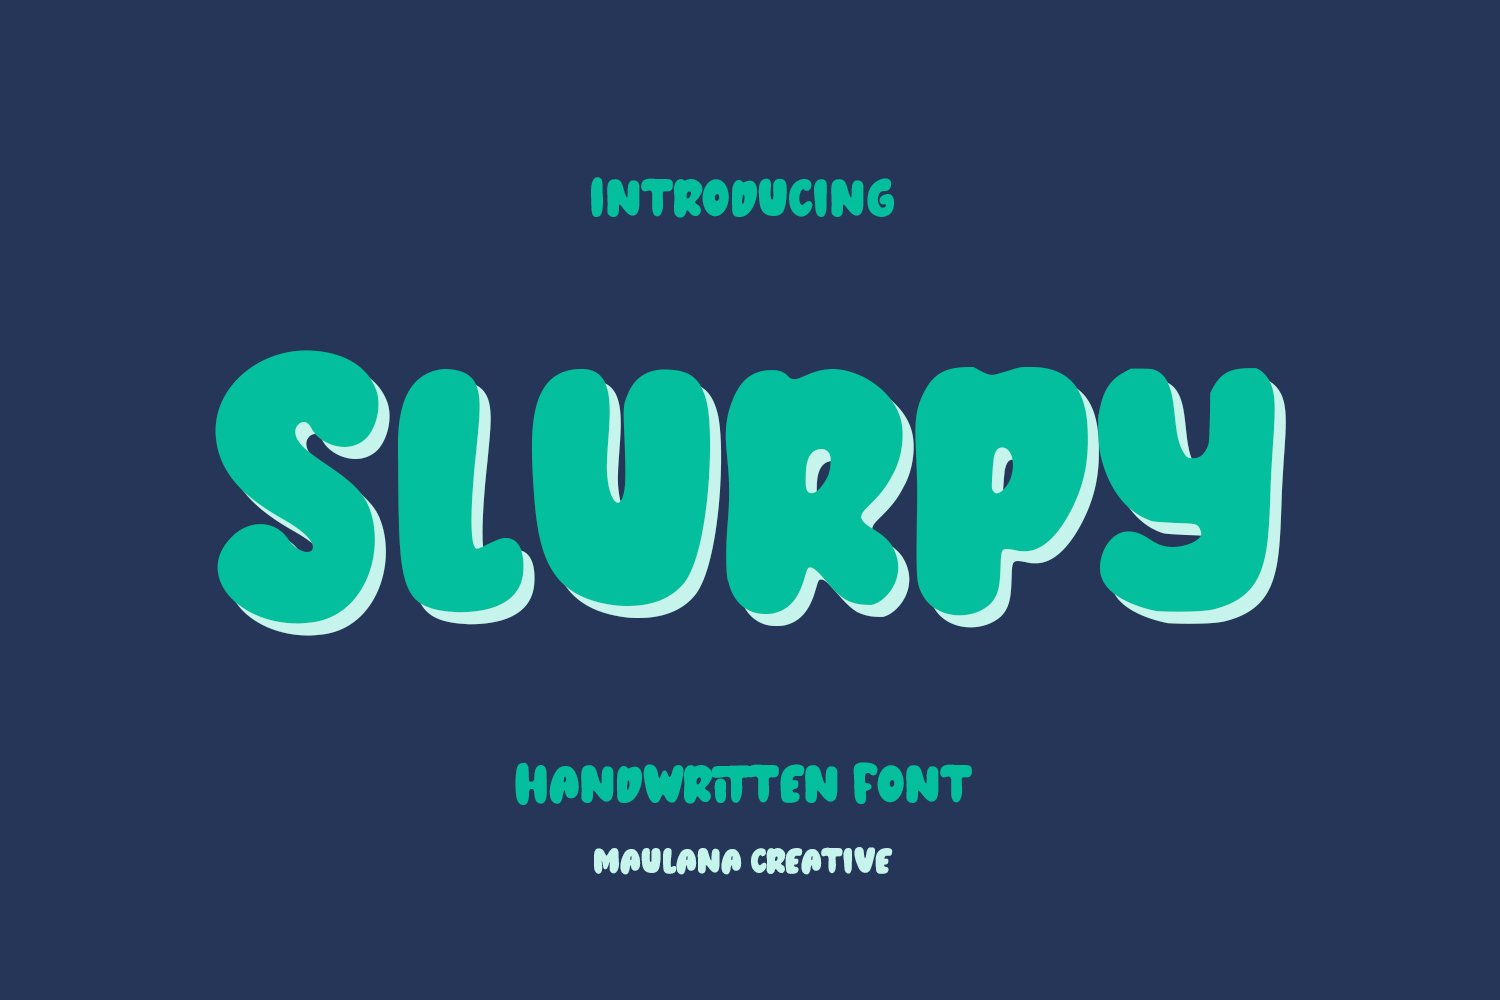 Slurpy Handwritten Font cover image.